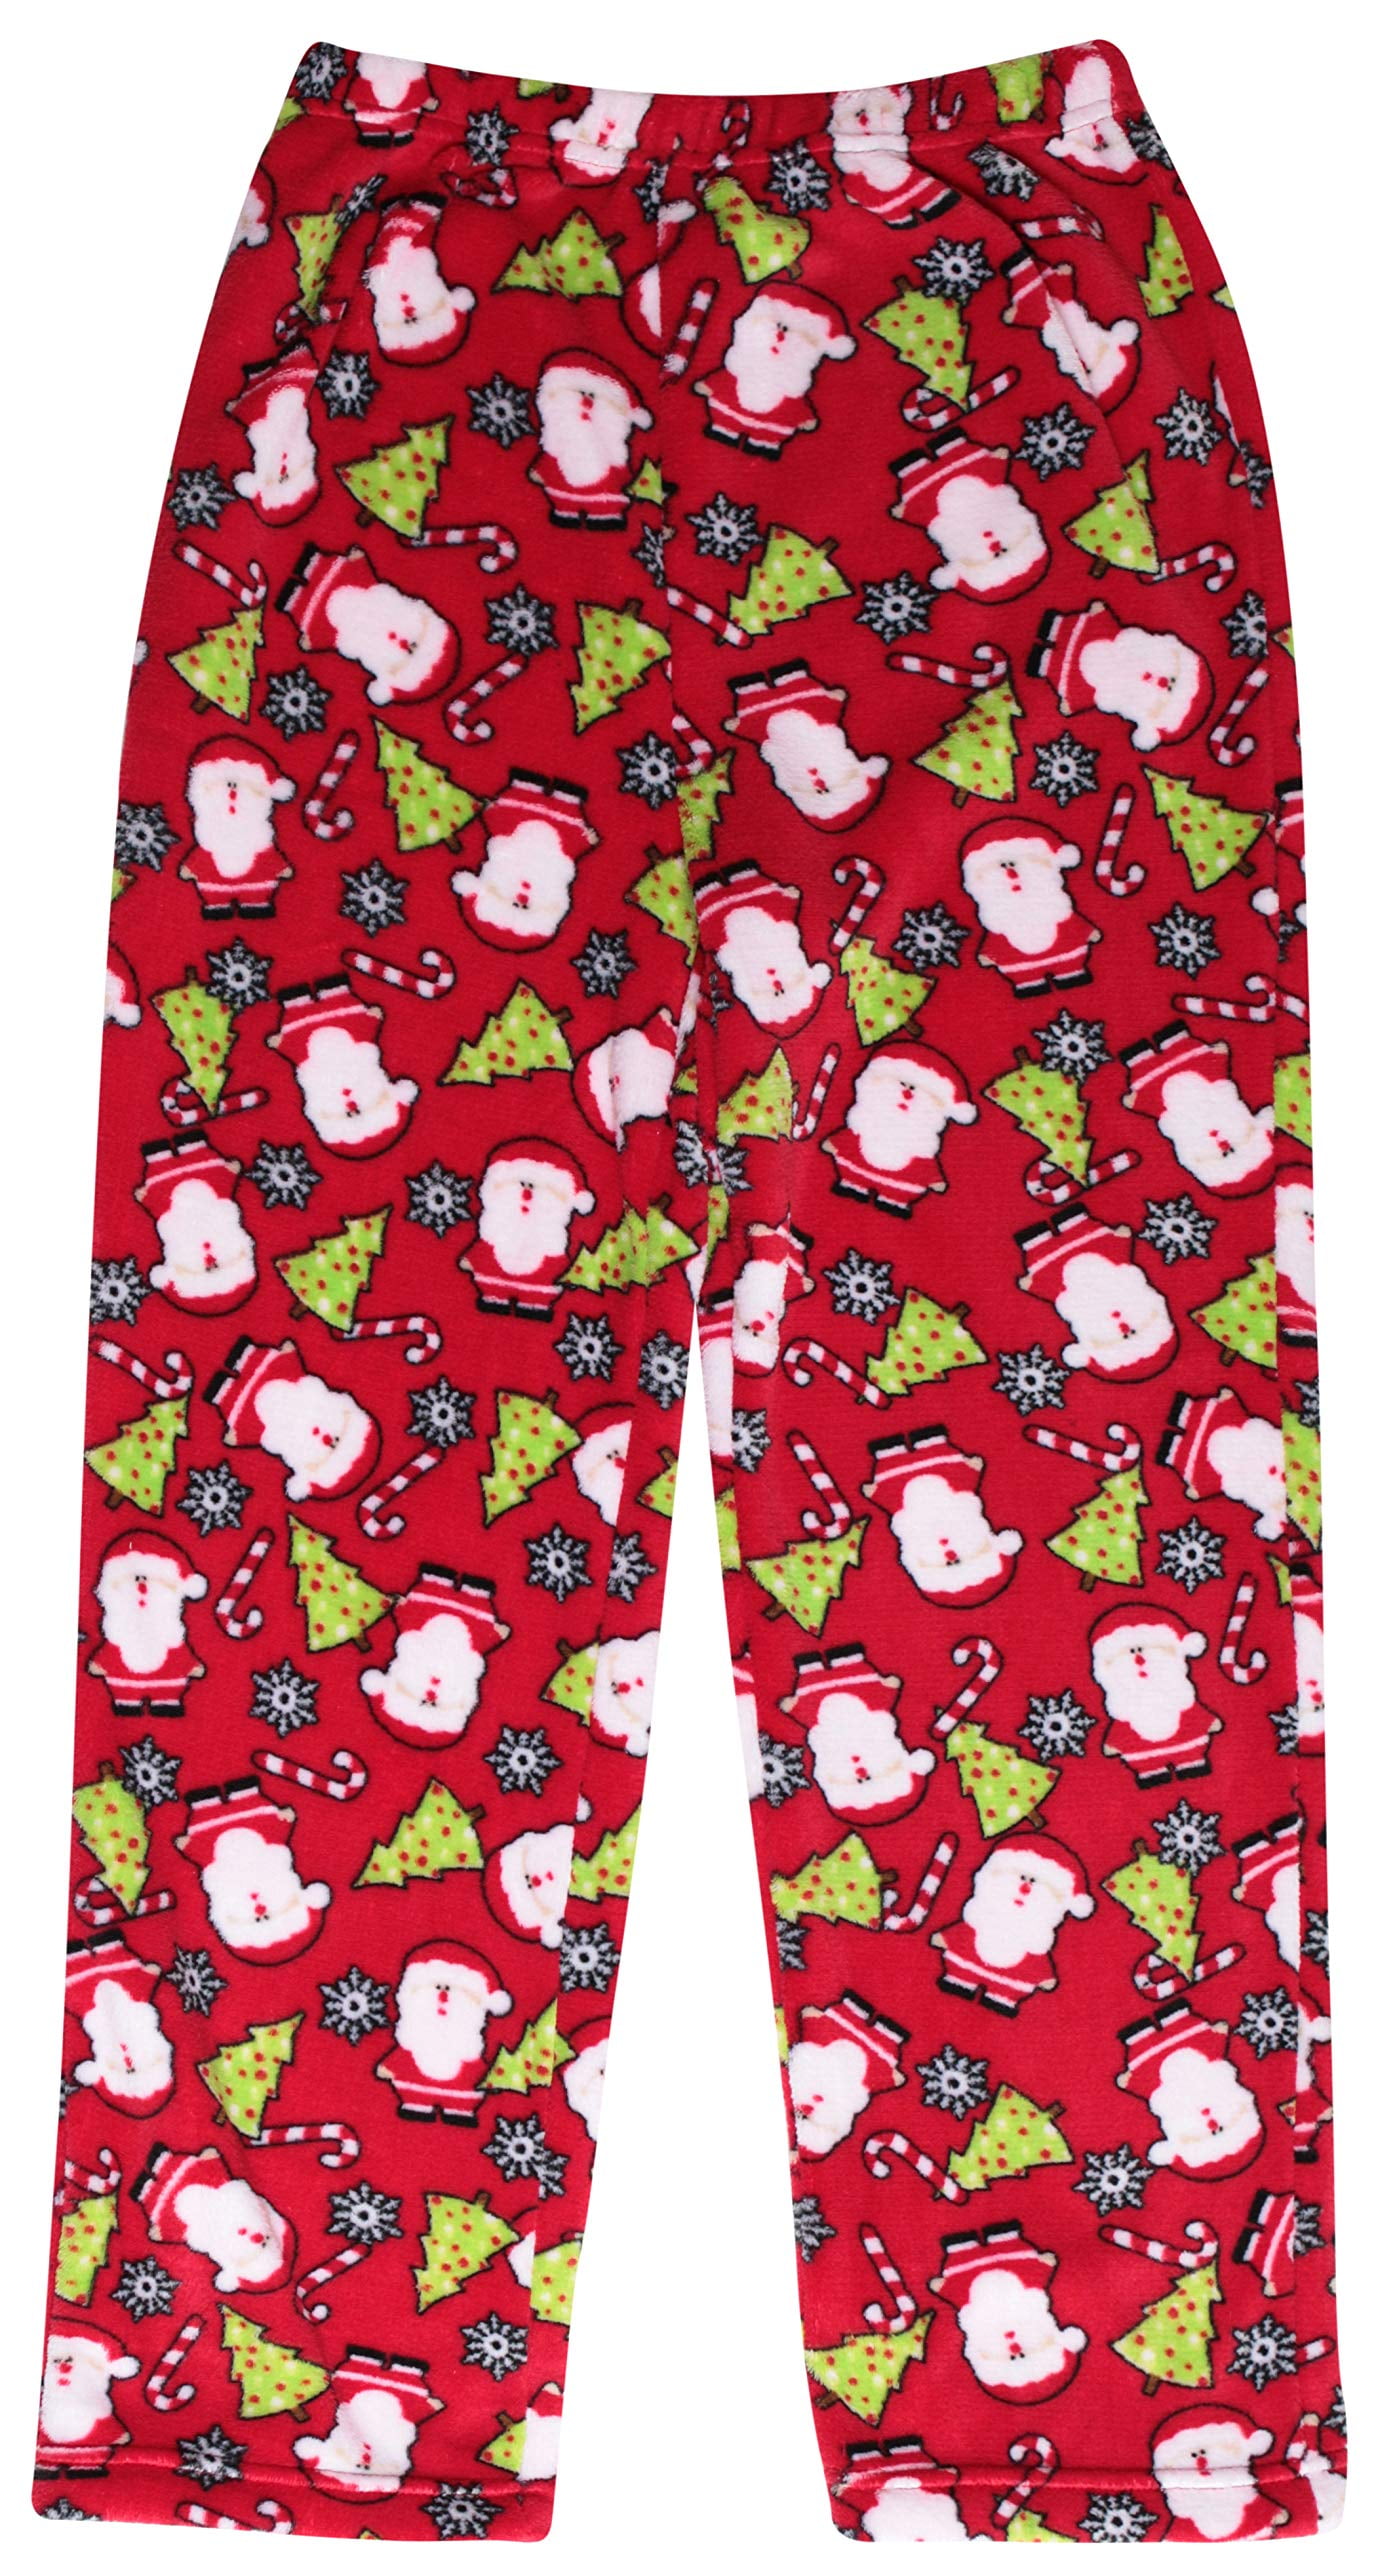 Prince of Sleep Boys' Plush Fleece Pajama Pants - Warm and Cozy Sleepwear  (Red Tossed Holiday, 5-6 Years)